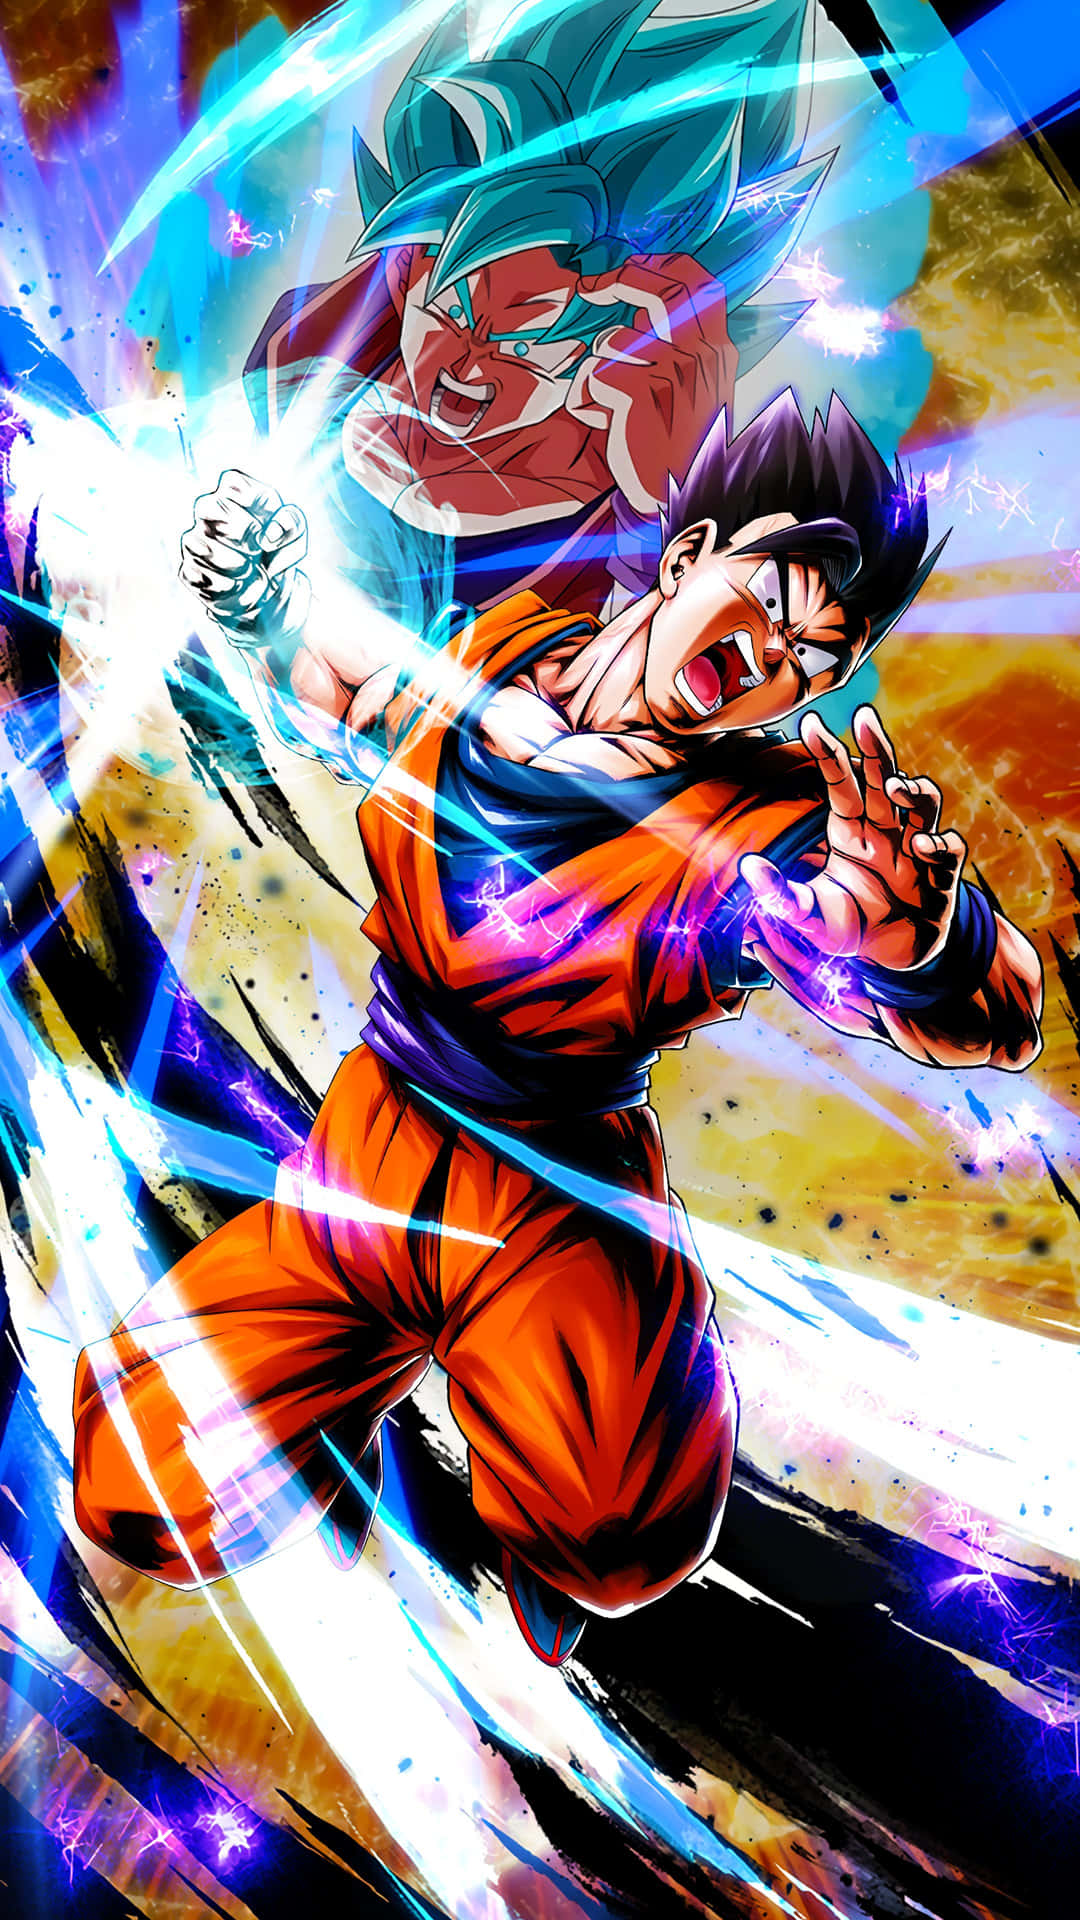 Gohanand Goku Super Saiyan Blue Transformation Wallpaper